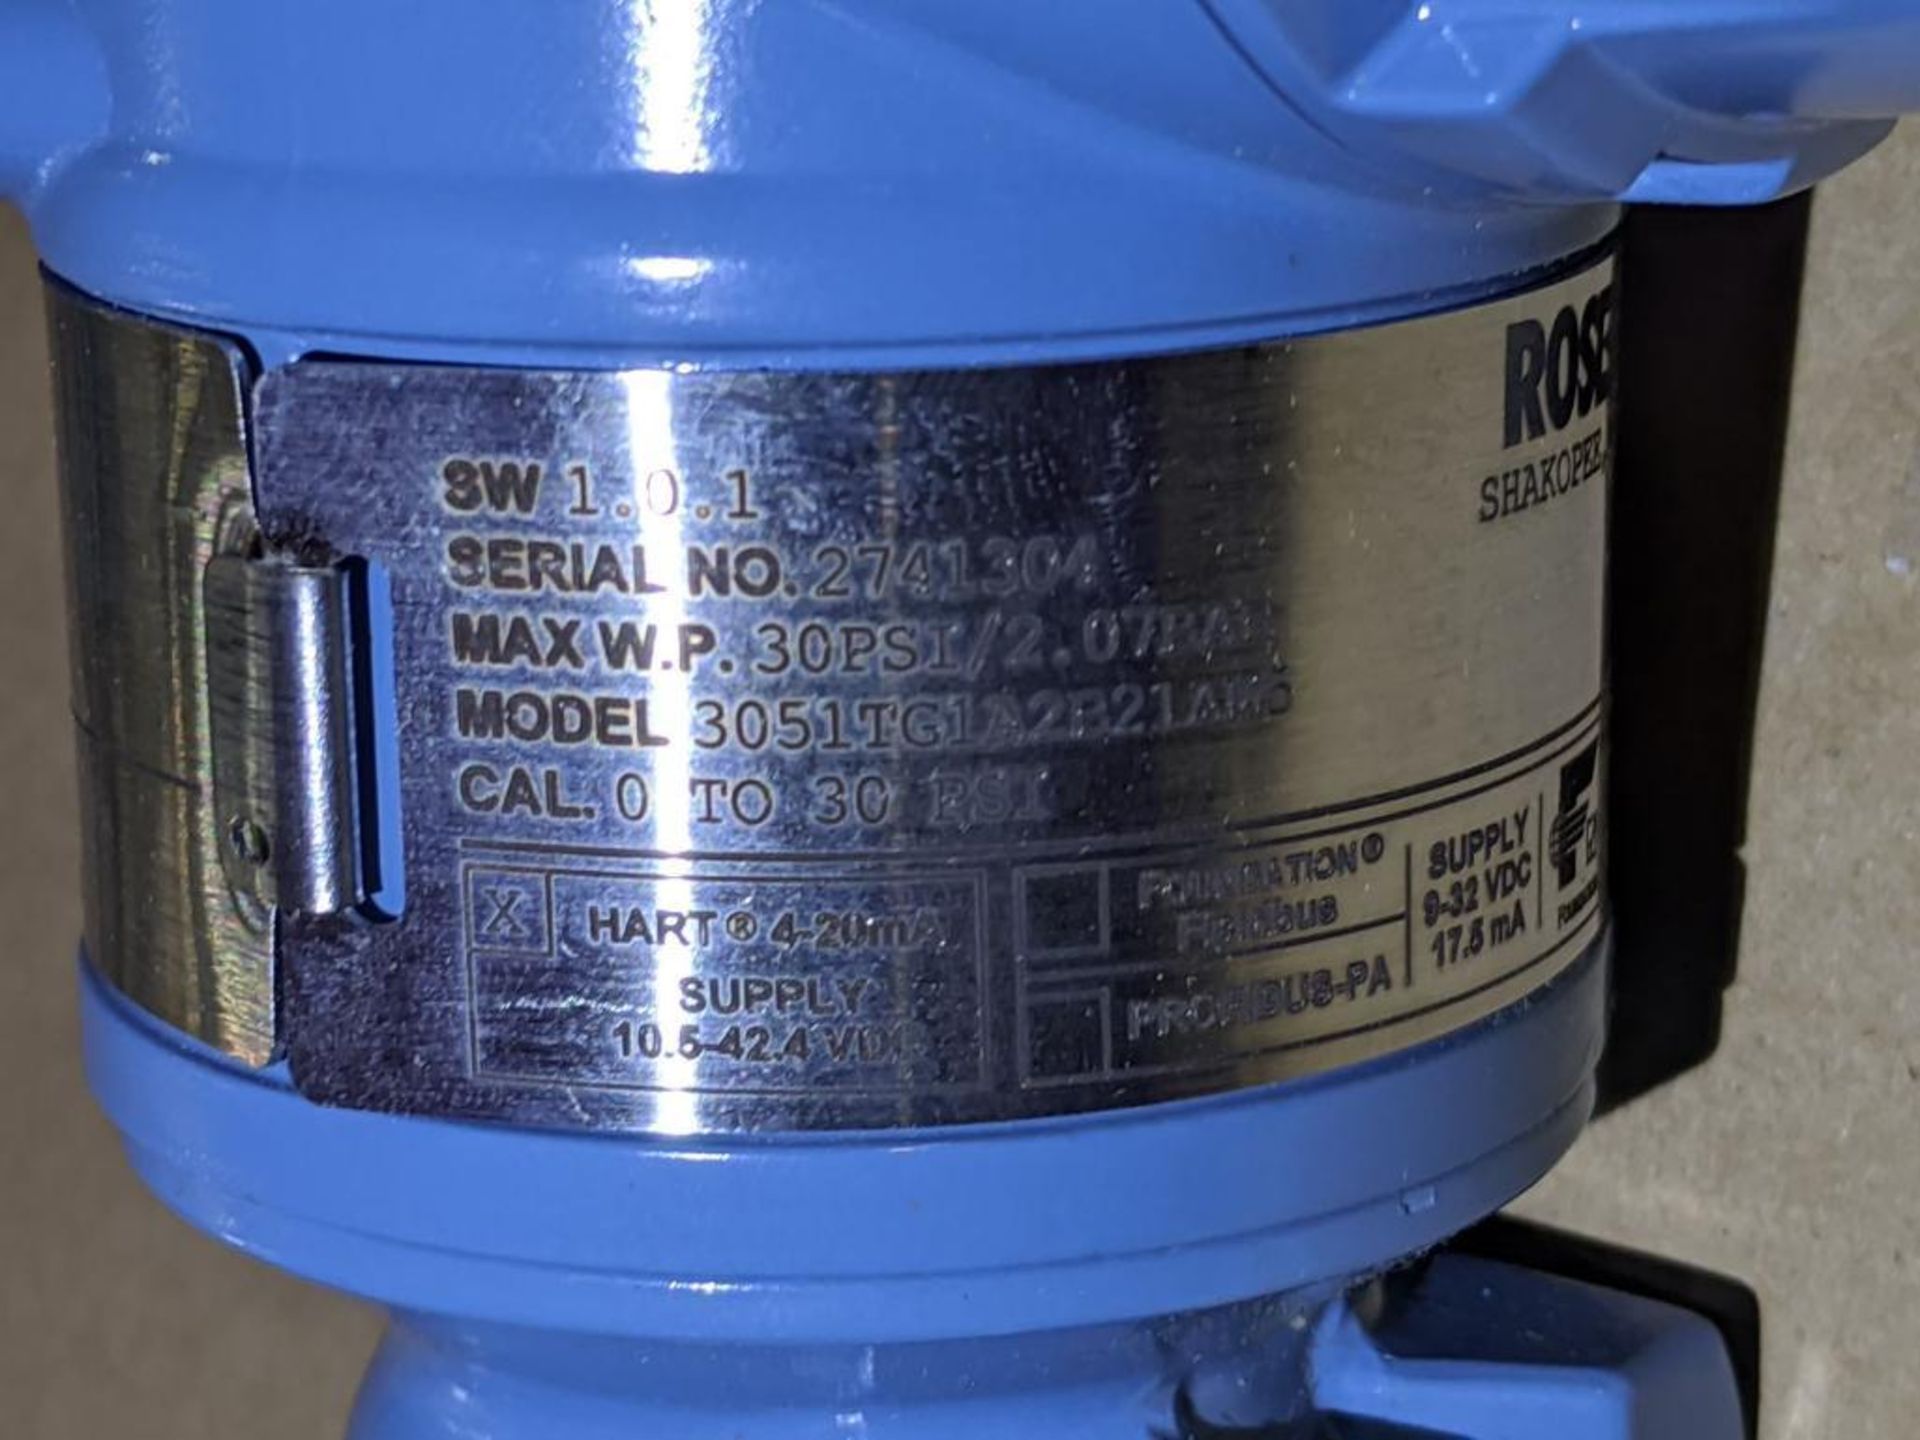 NEW Rosemount Model 3051TG3A2B21AM5 Pressure Transmitter - Image 3 of 3